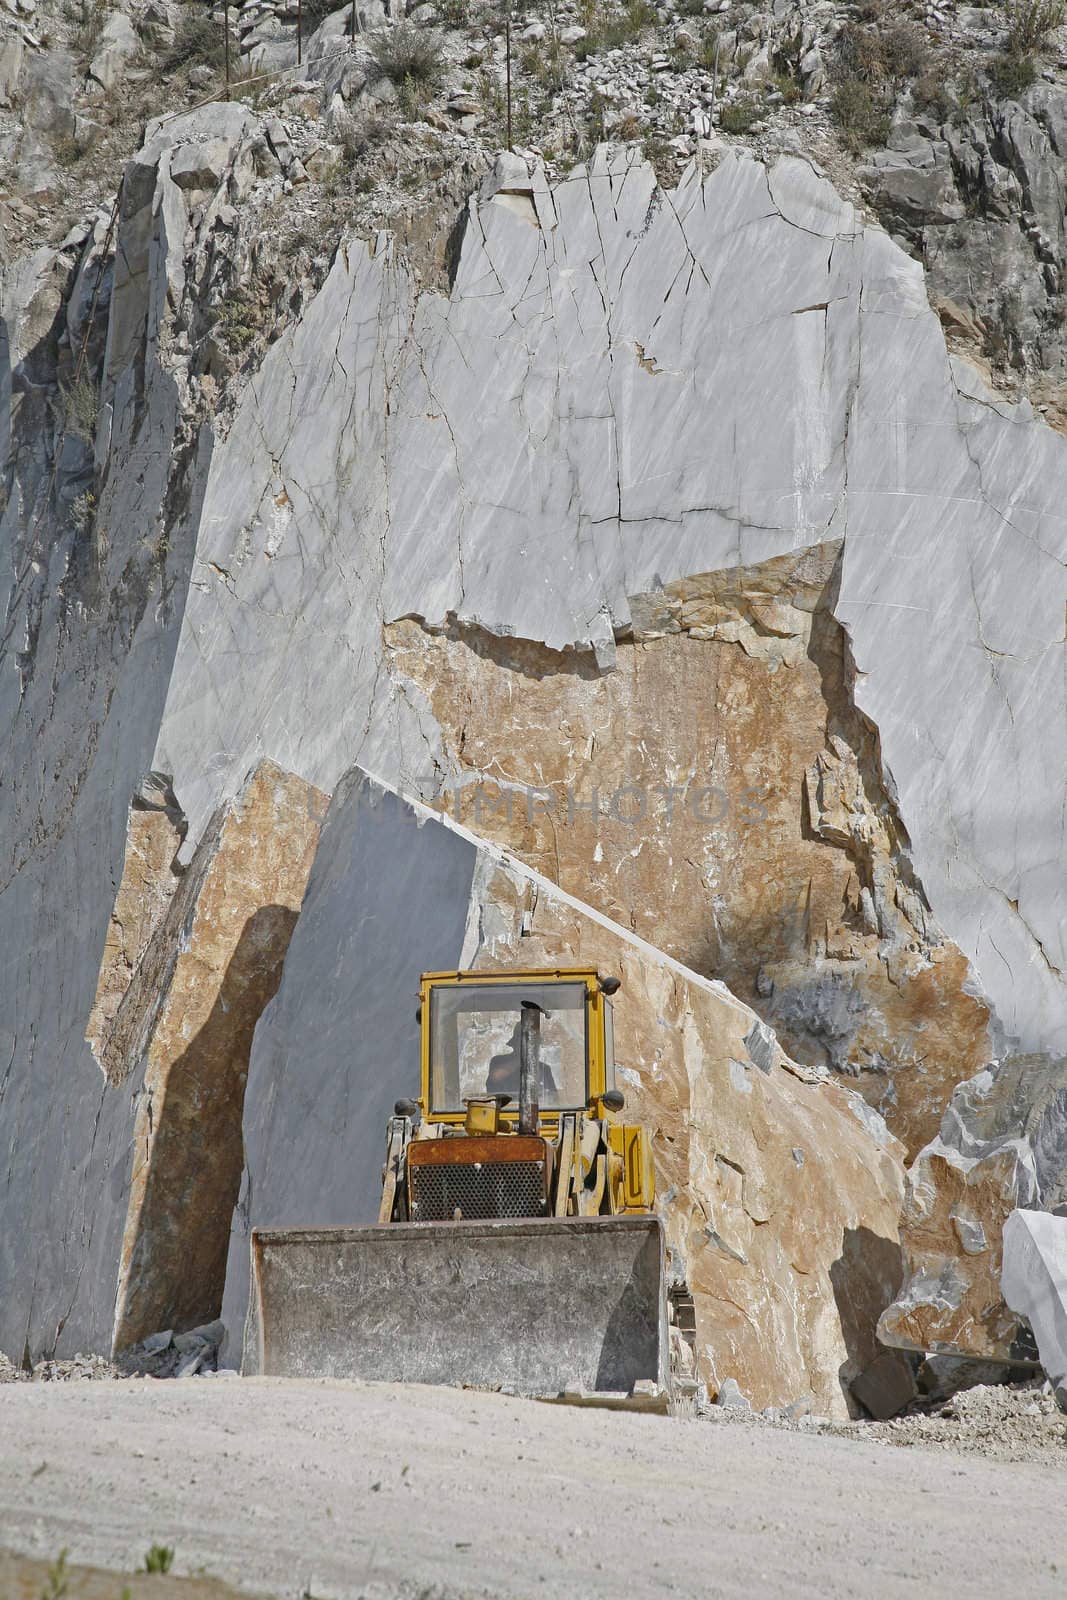 Marble quarry in the mountains near Carrara - Tuscany - Italy.